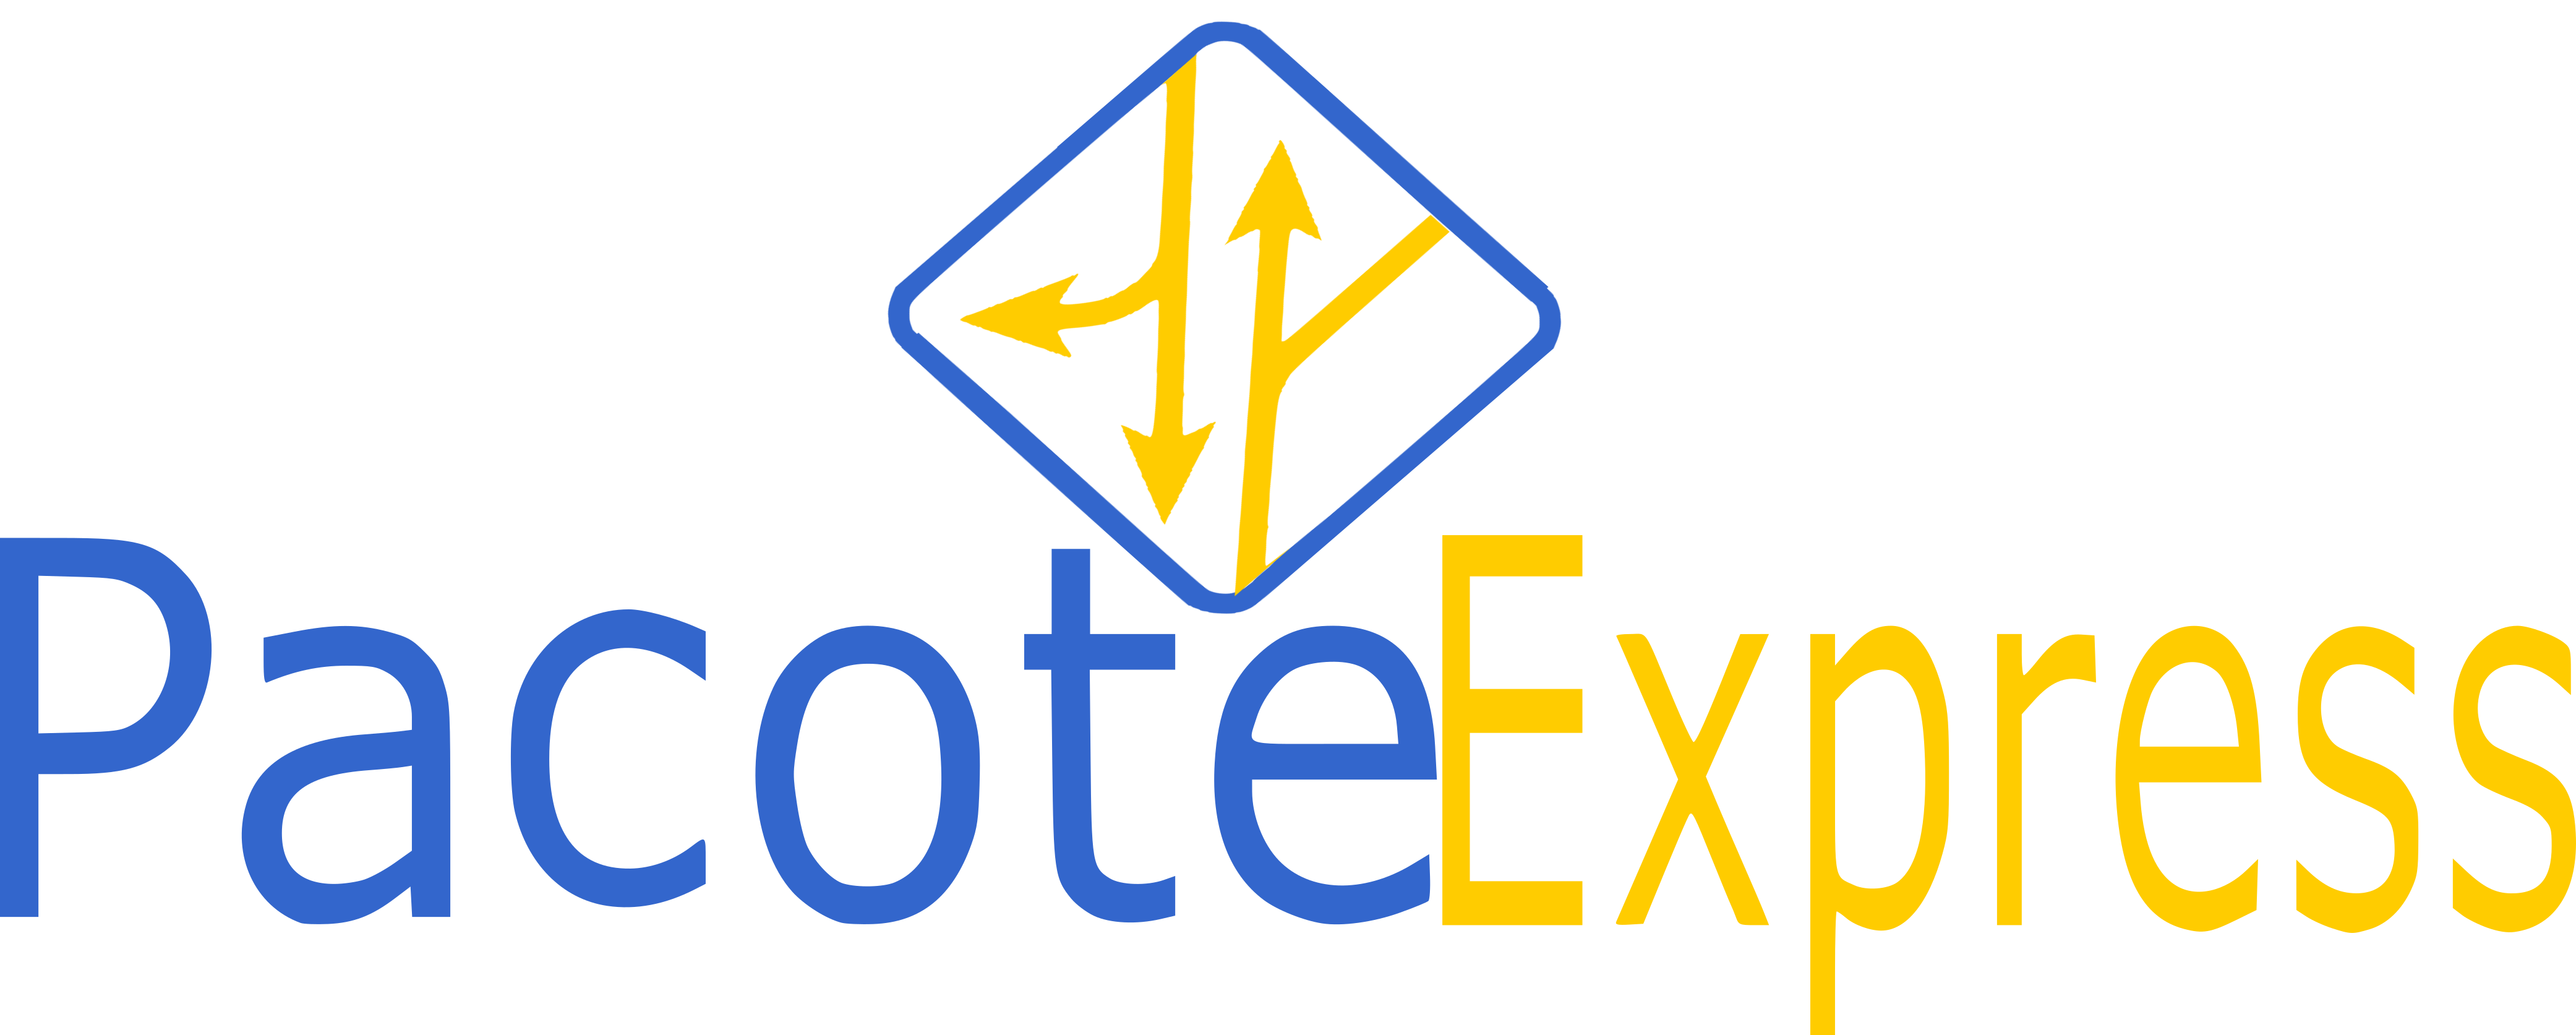 Pacote Express Logo